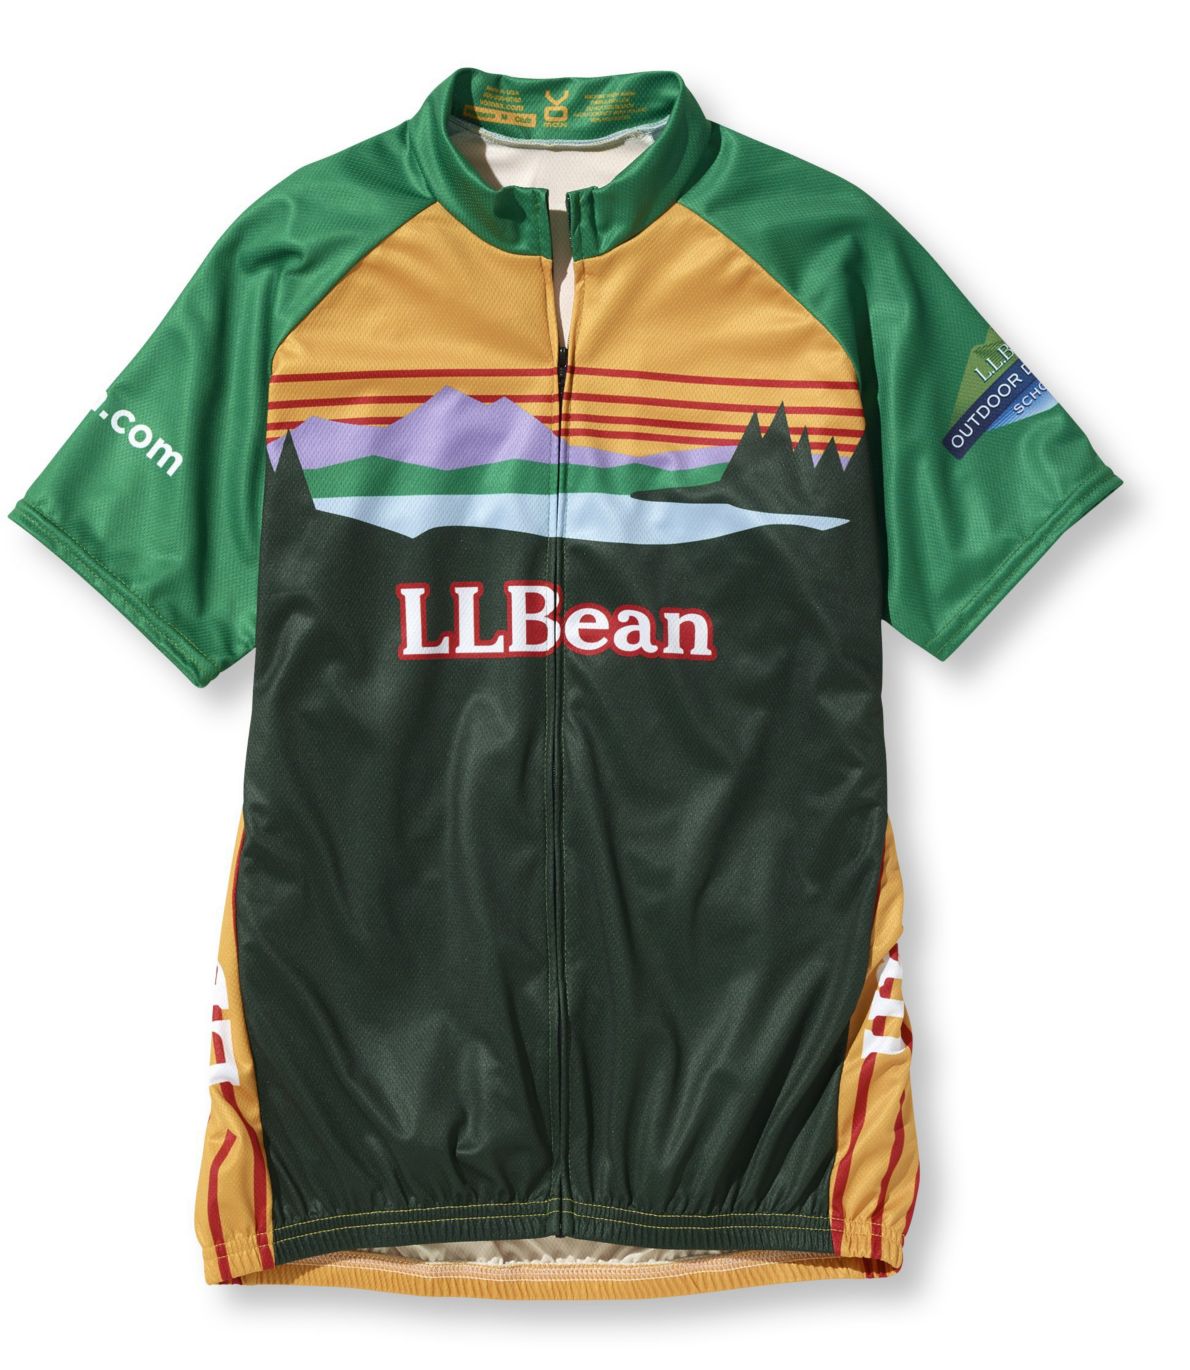 Women's L.L.Bean Team Cycling Jersey